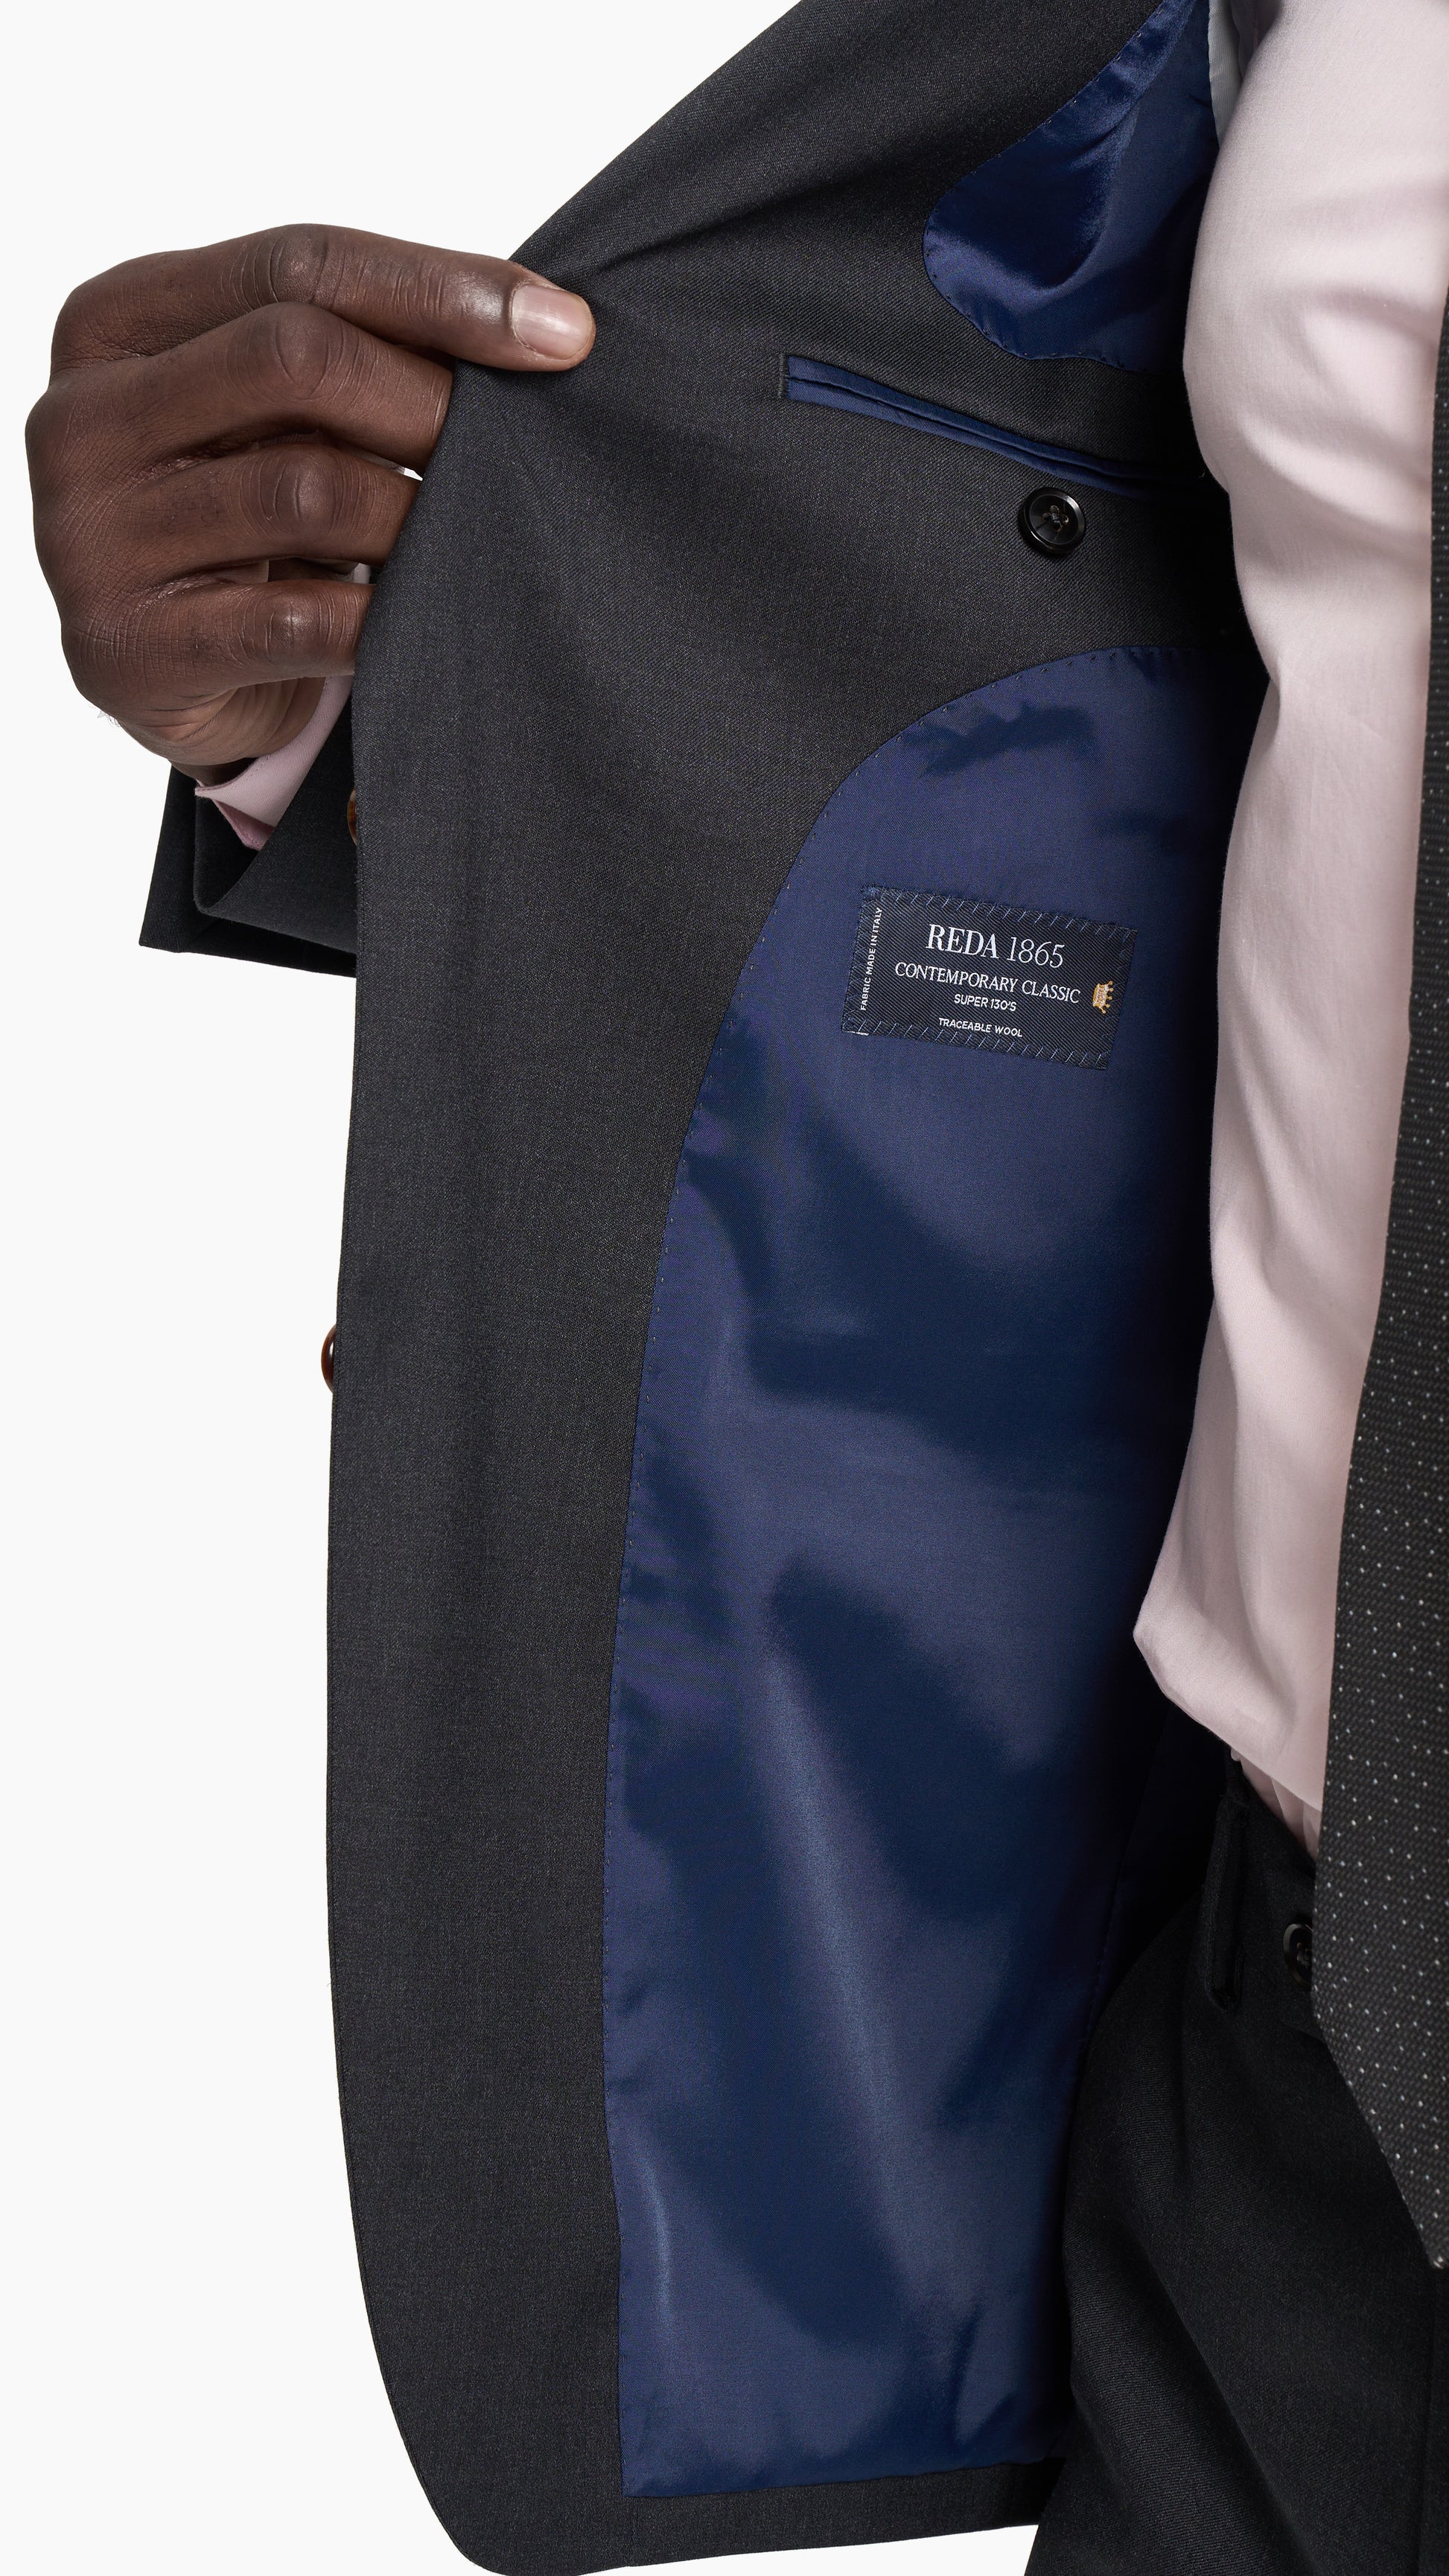 Charcoal Grey Plain Weave Jacket